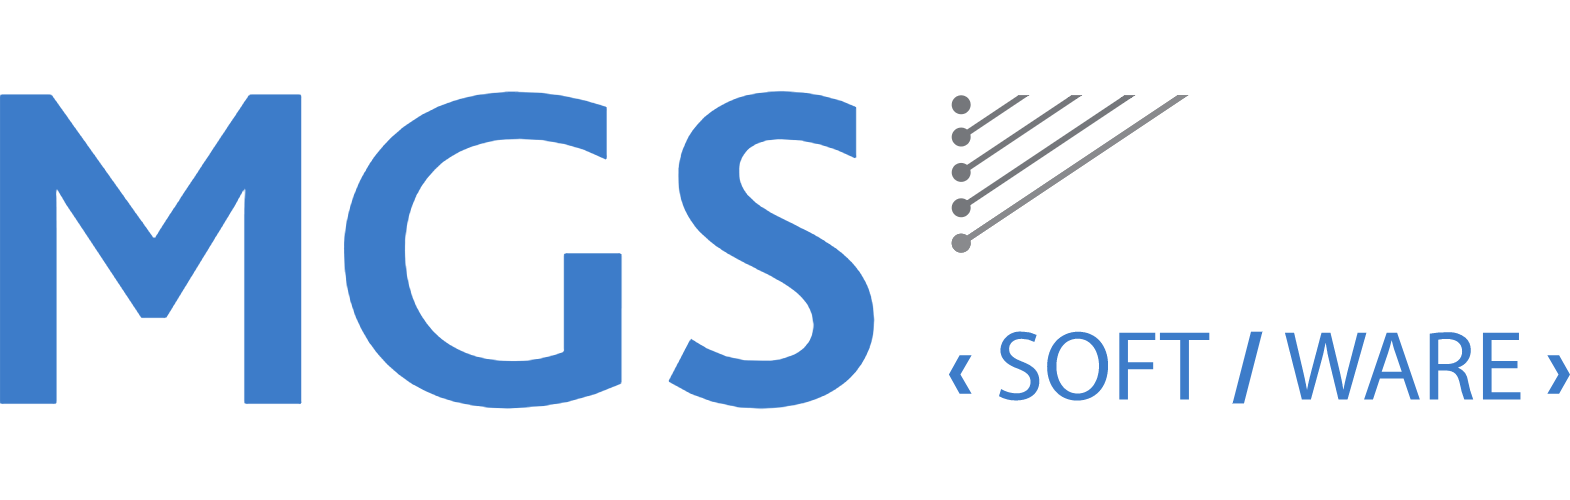 mgs-software-logo